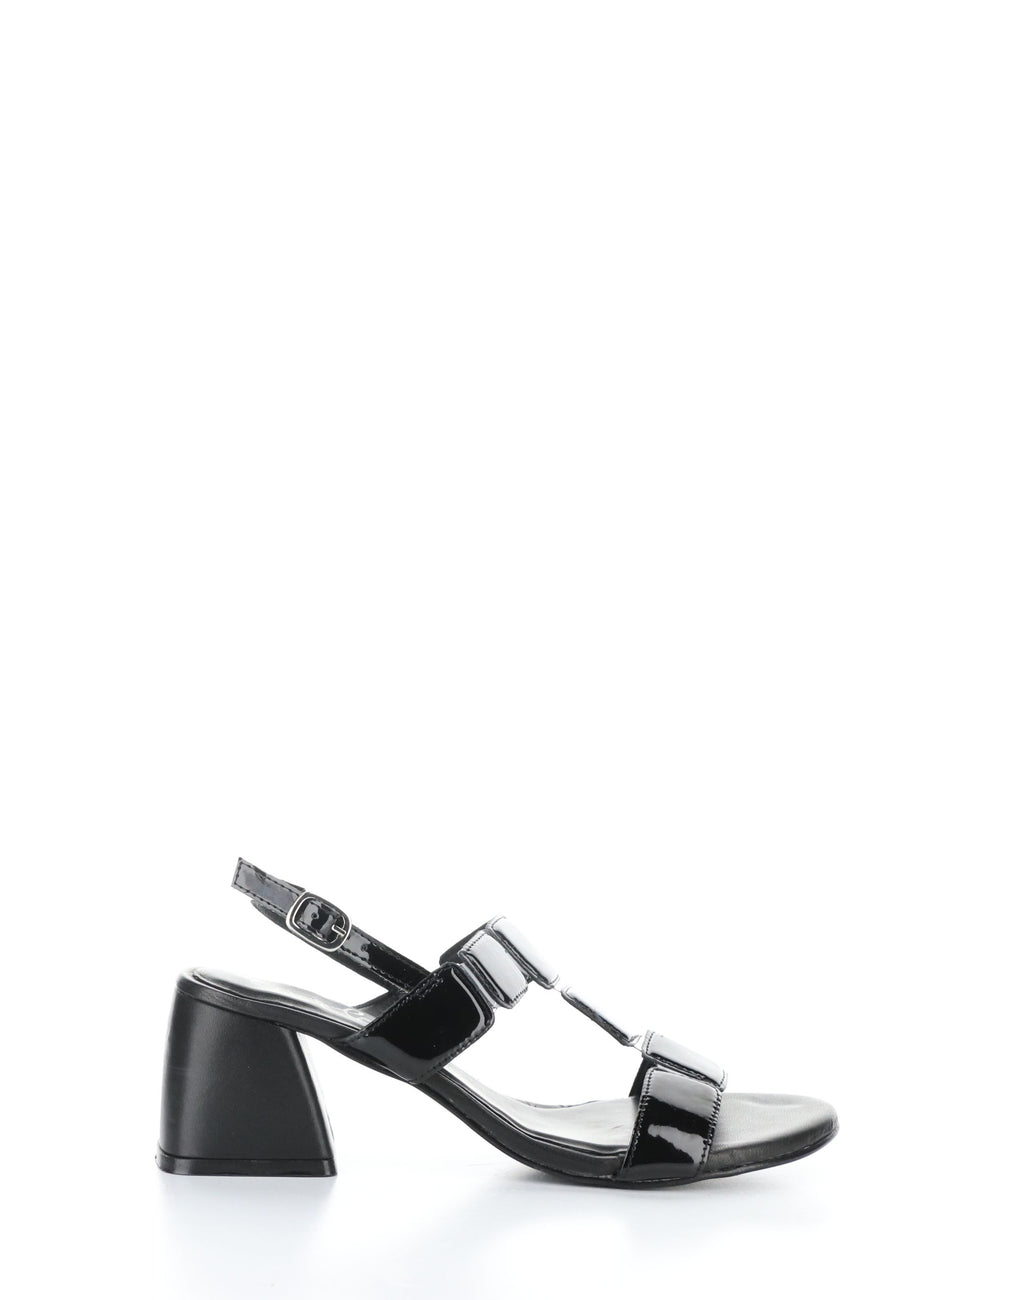 Bos & Co "Glow" Black patent block heel sandal